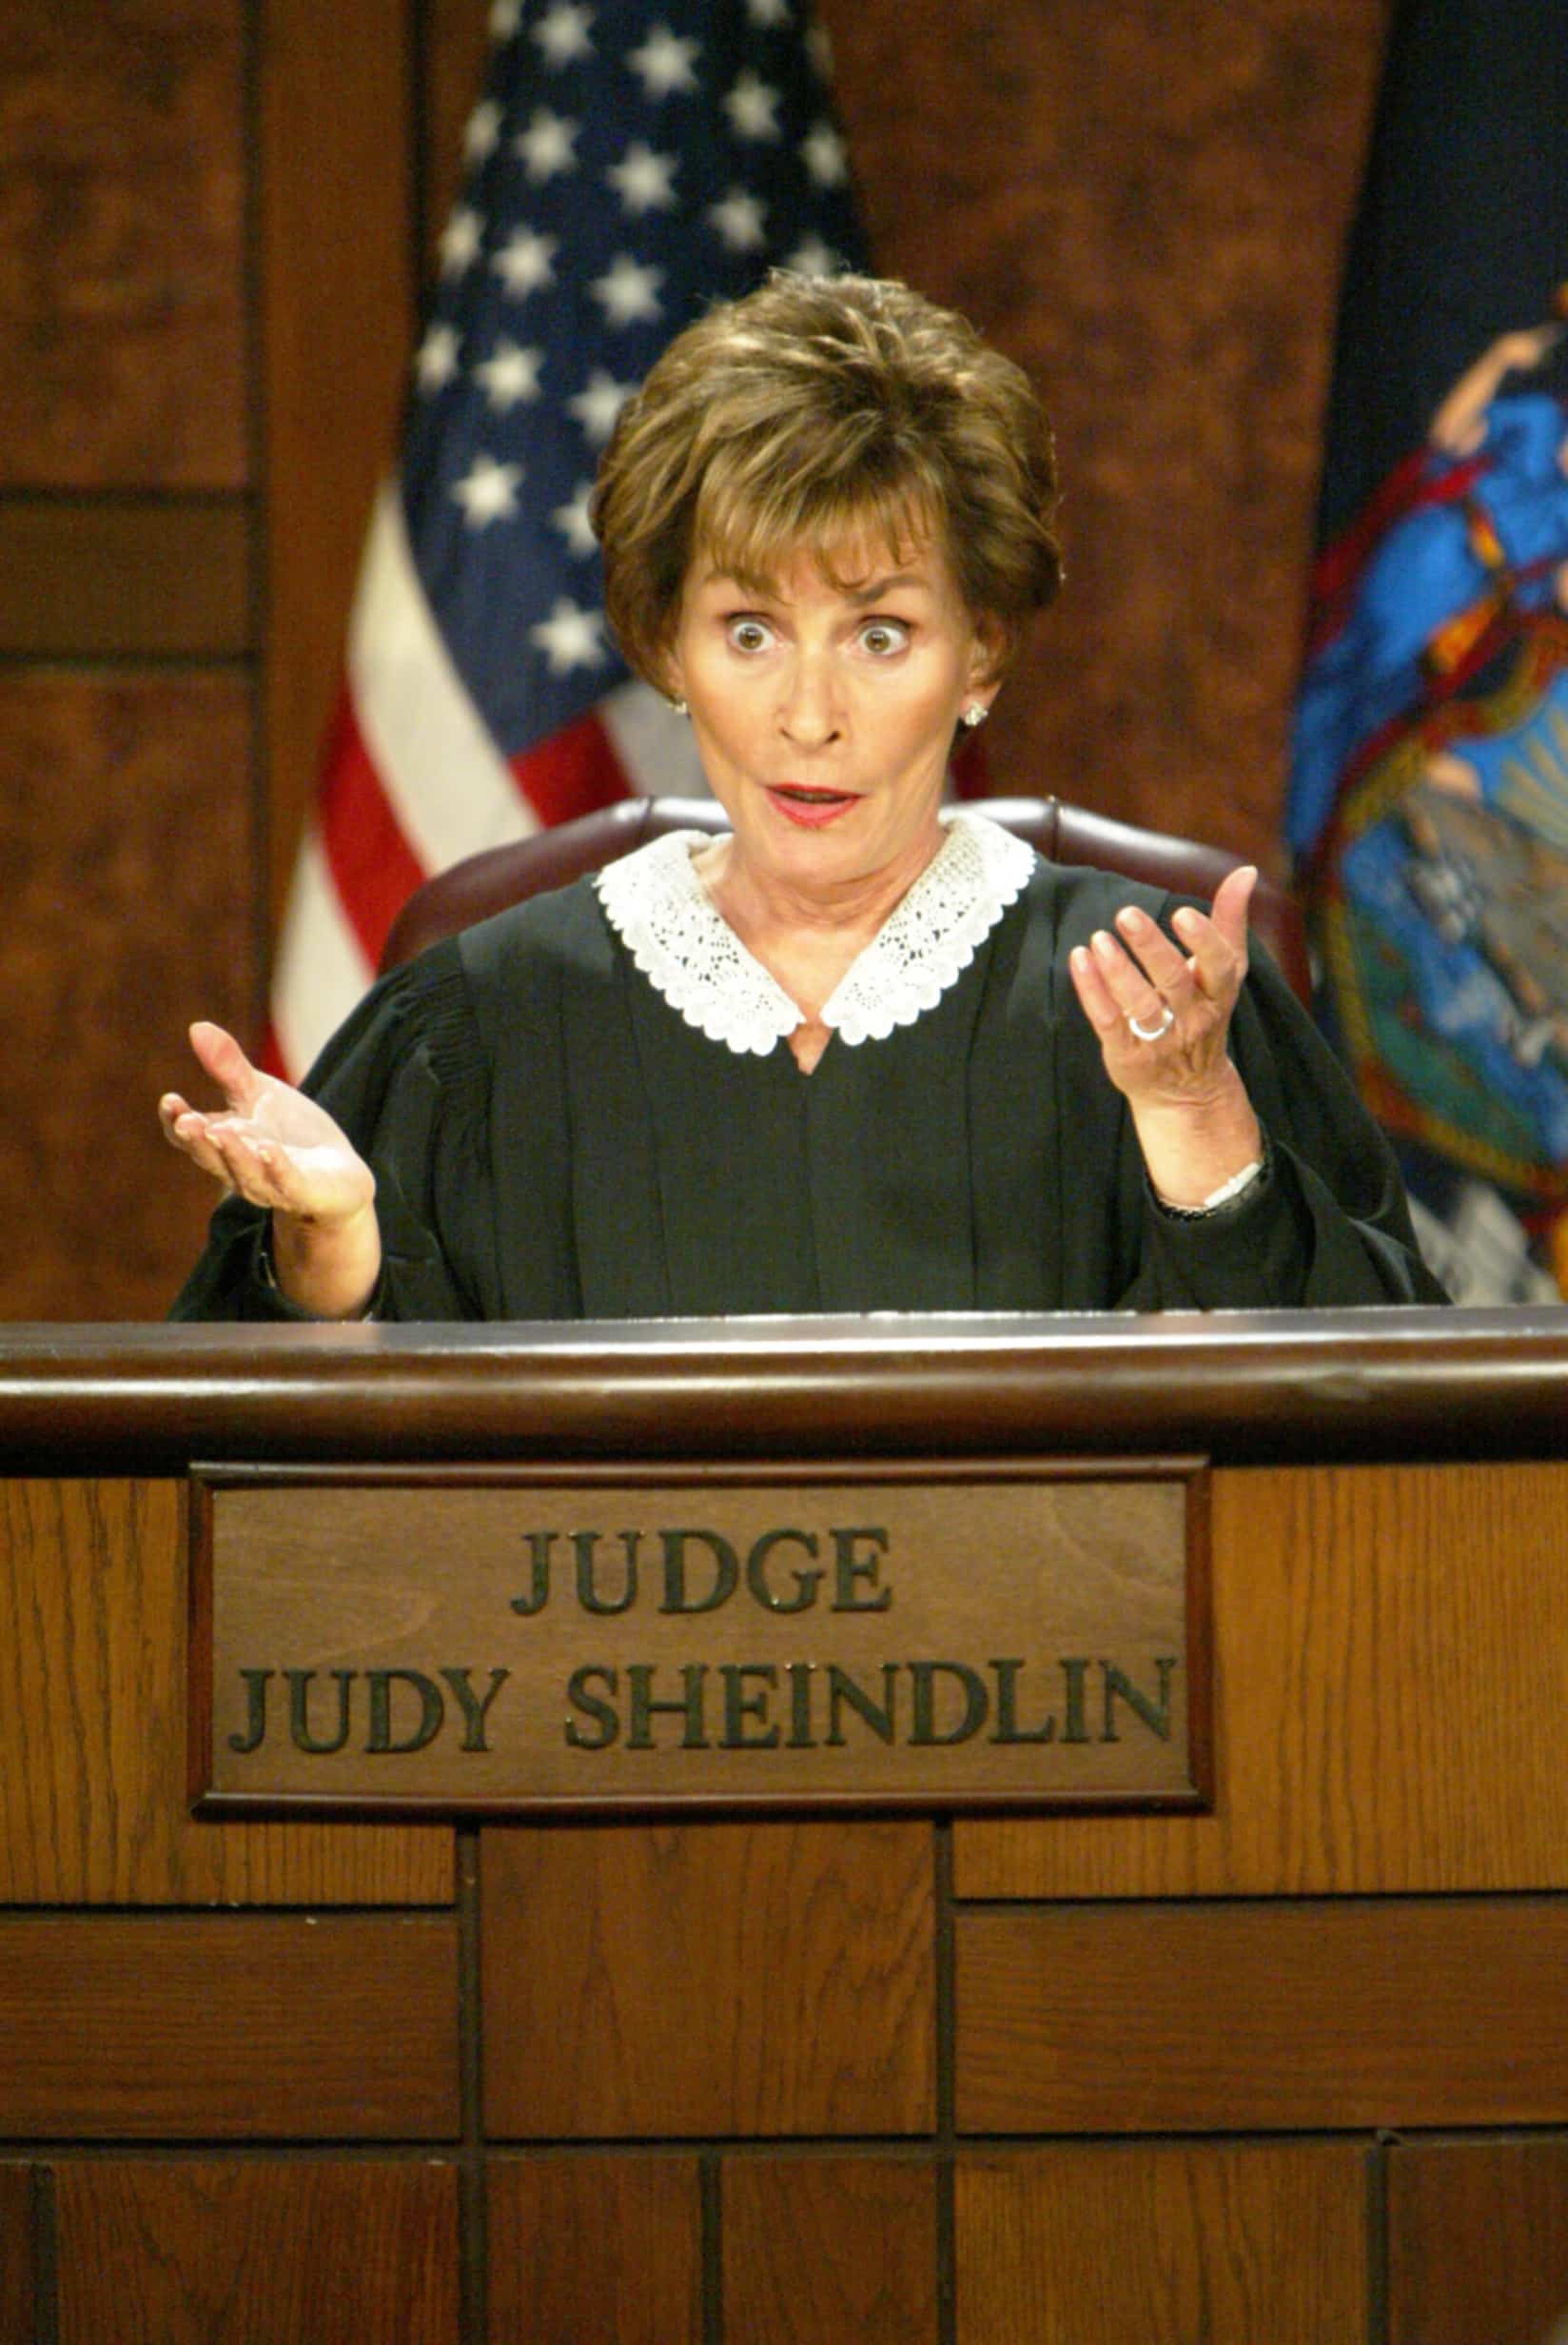 JUDGE JUDY, Judge Judy Sheindlin, 1996-